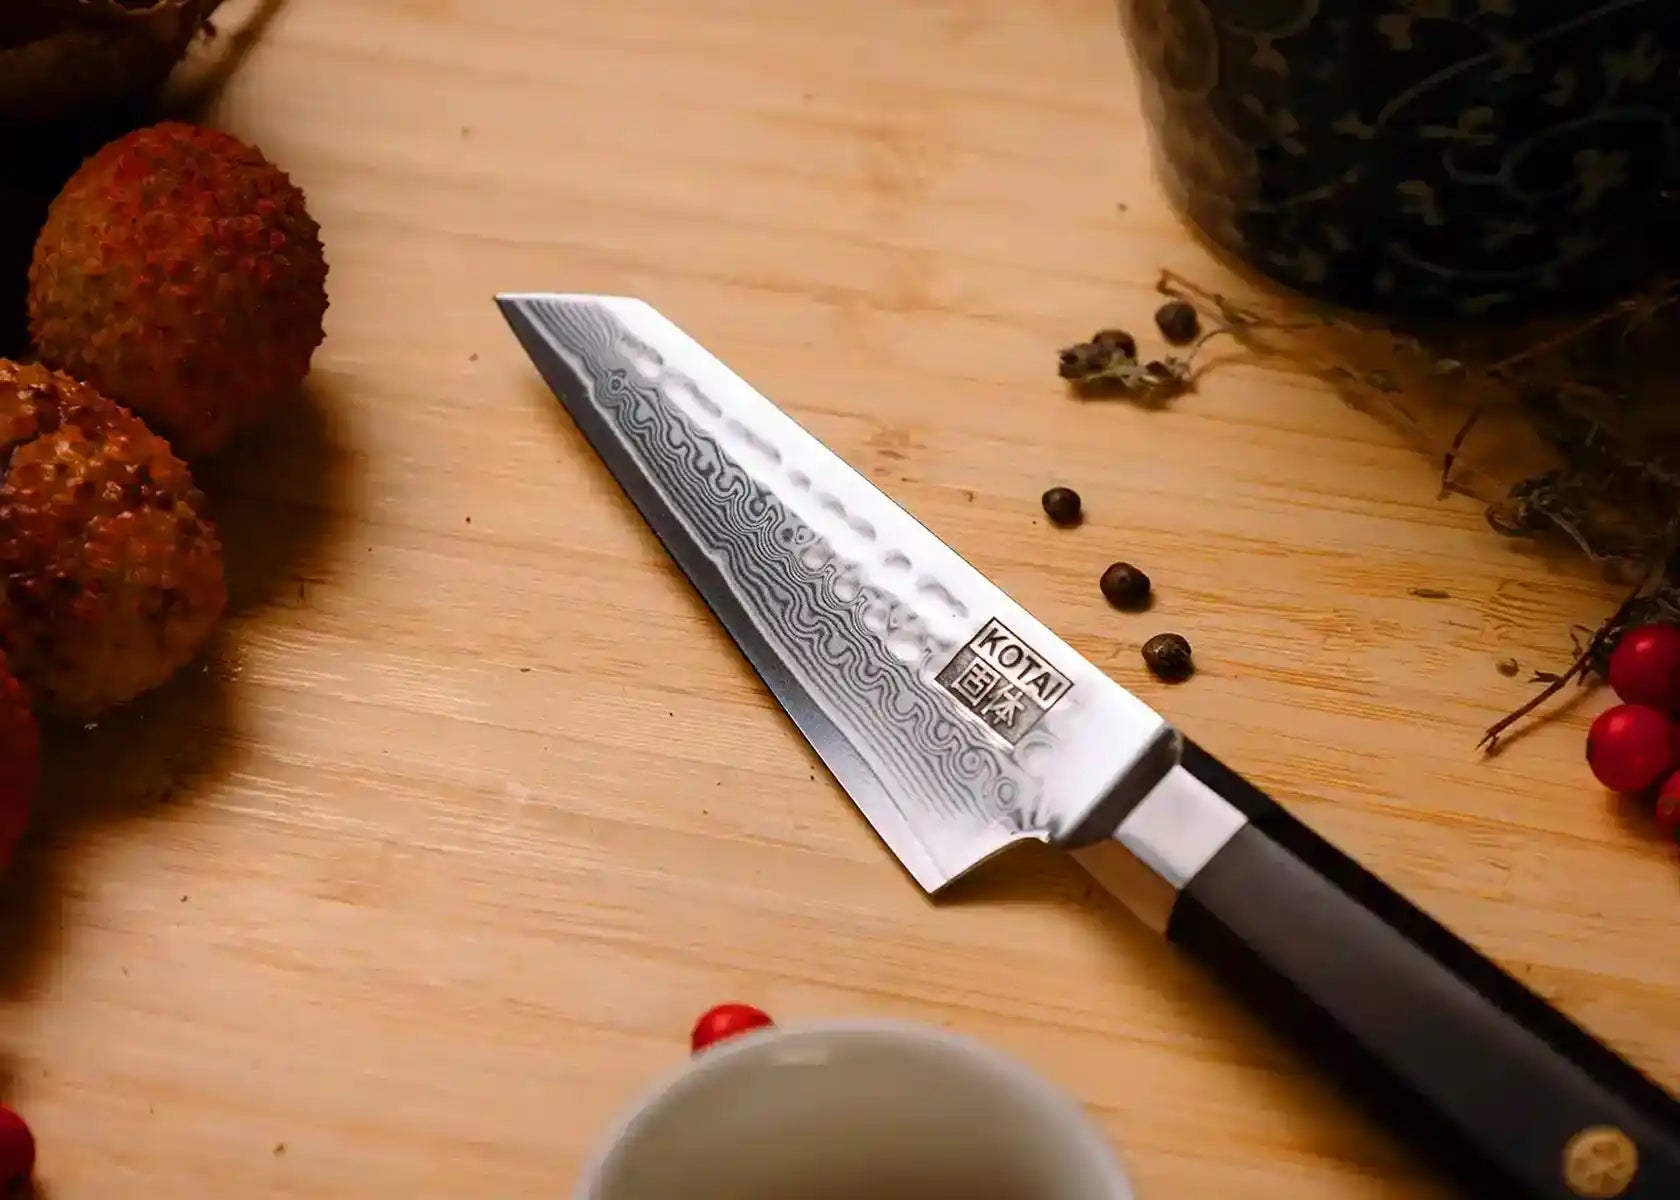 Damascus Paring Knife - Bunka Collection - 90 mm blade